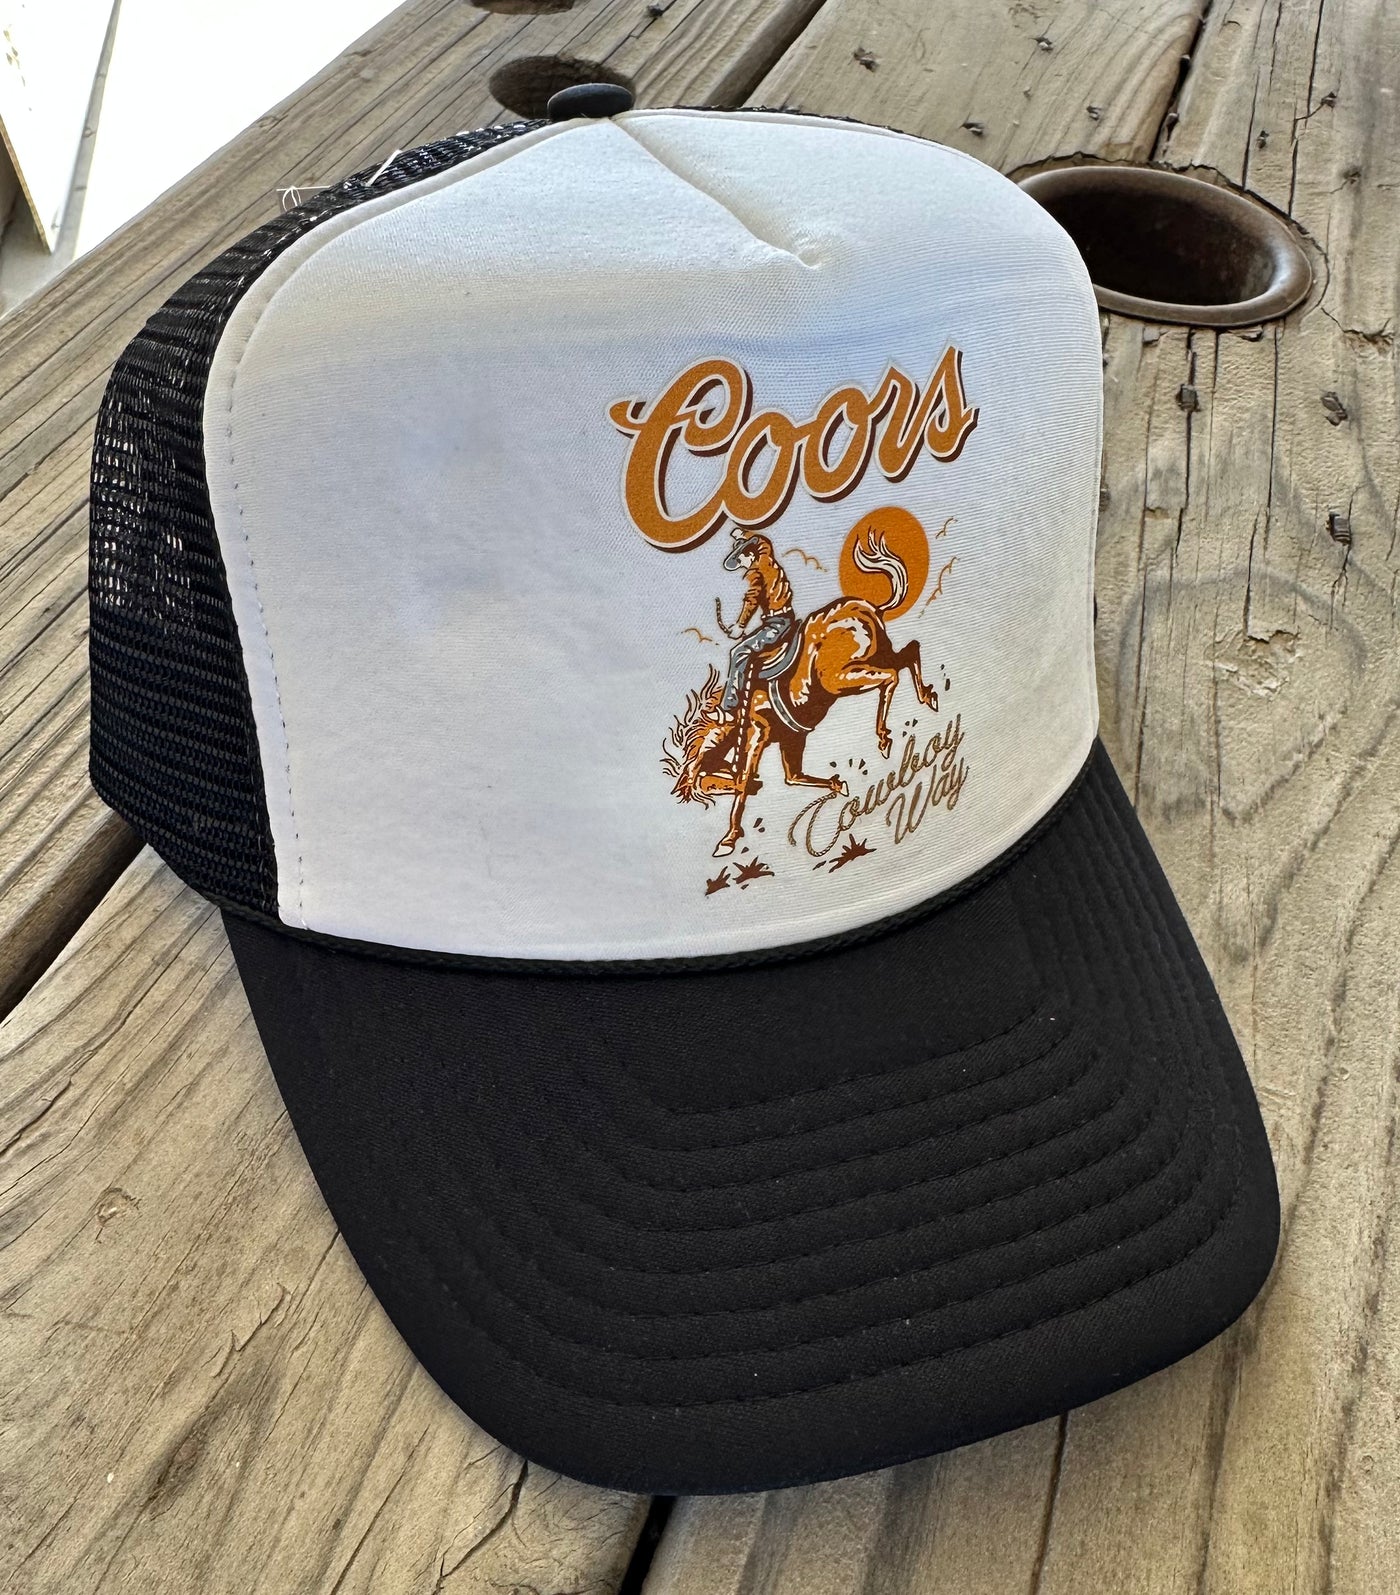 Coors Cowboy Way white cap